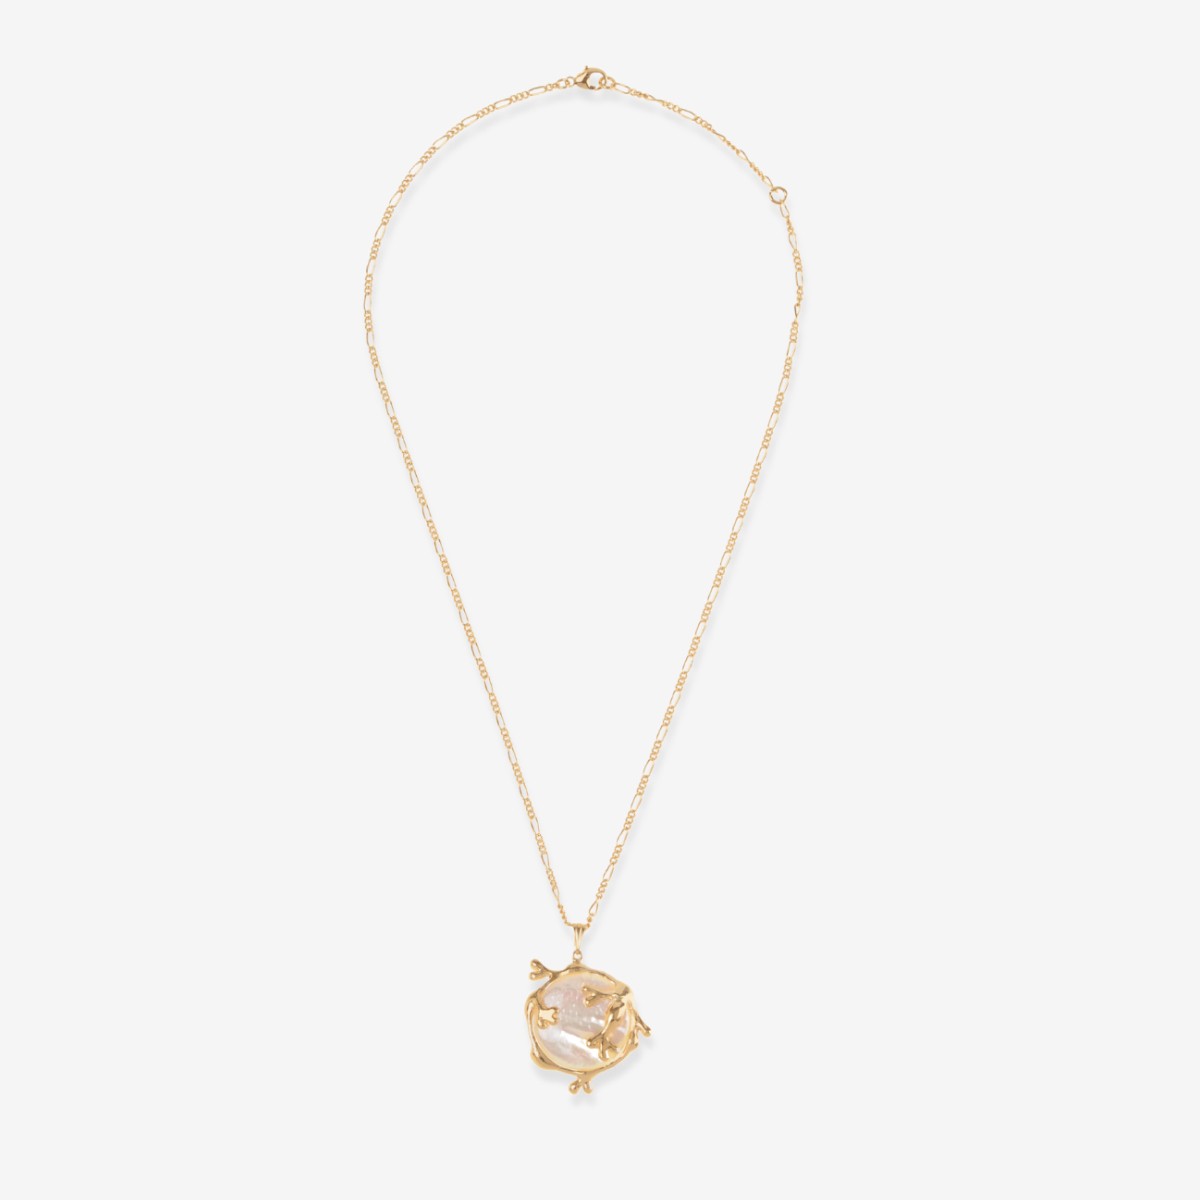 Amor Necklace - Halsketten - 24k vergoldet